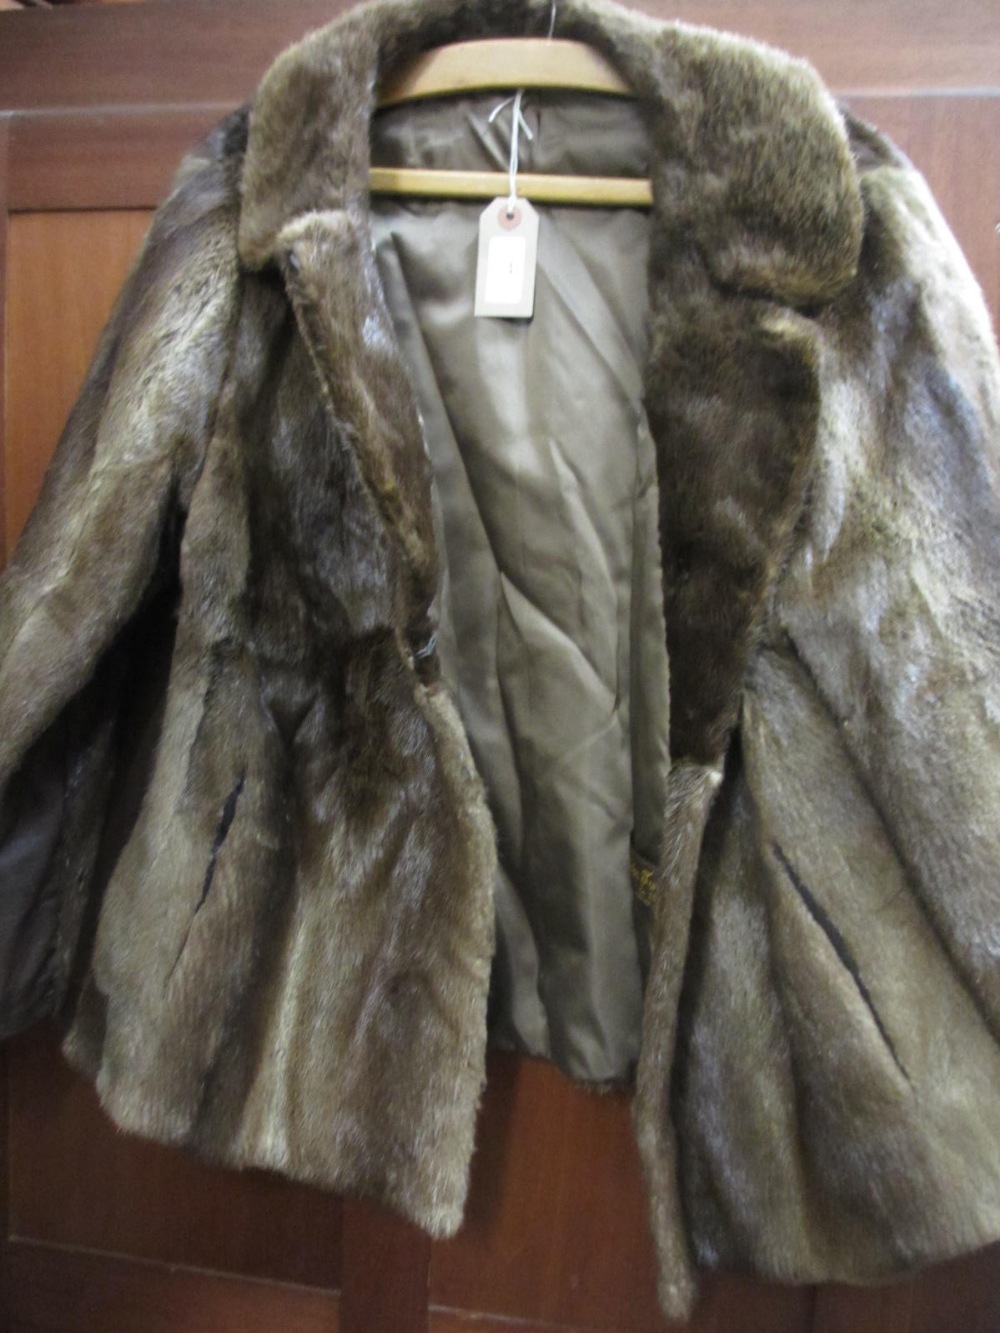 Ladies half length fur and leather jacket by Dominion Fur Co. Ltd., Edinburgh